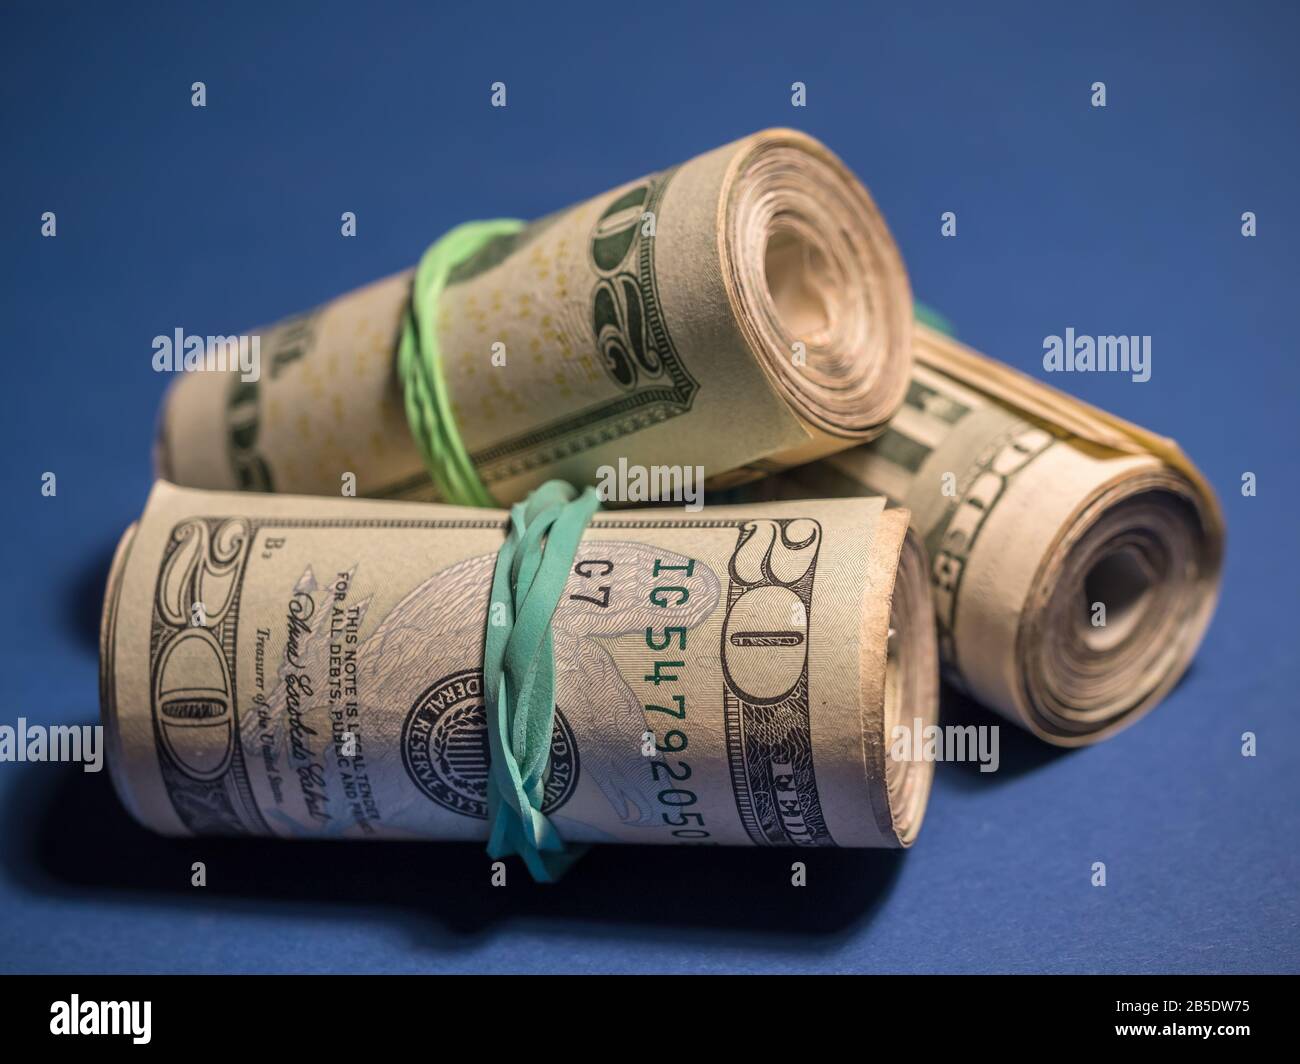 Rolls of American dollar bills on blue background Stock Photo